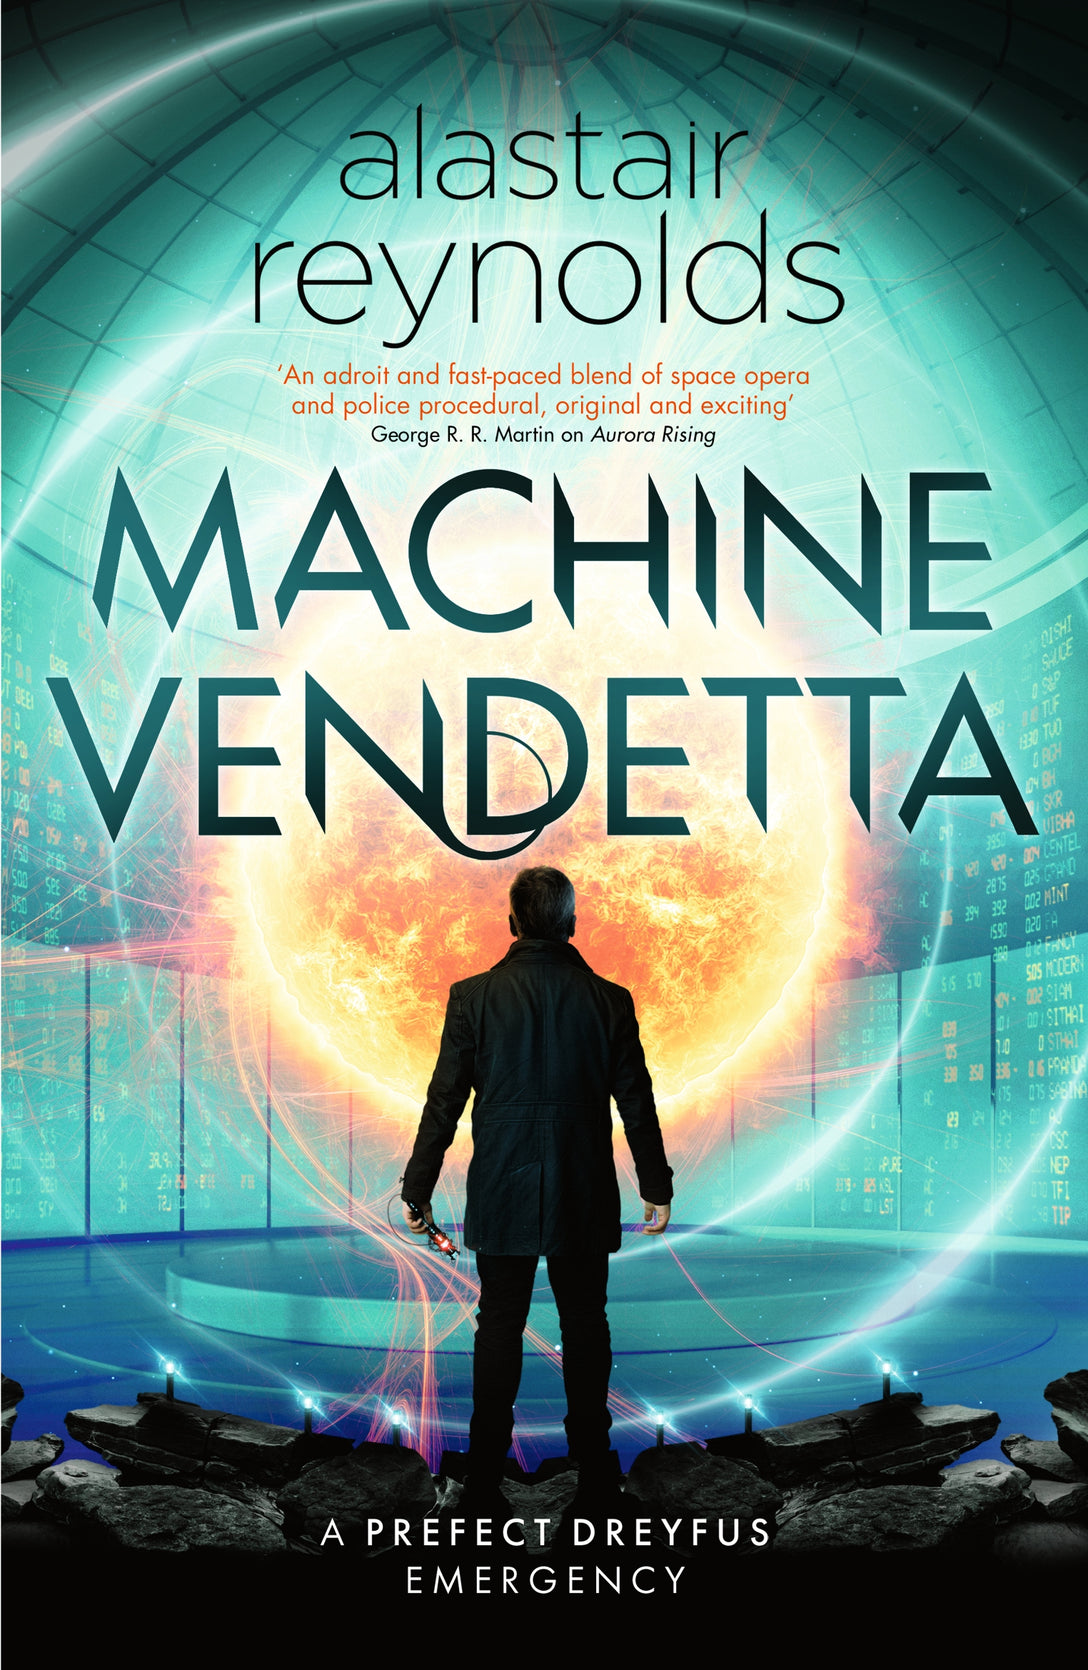 Machine Vendetta by Alastair Reynolds